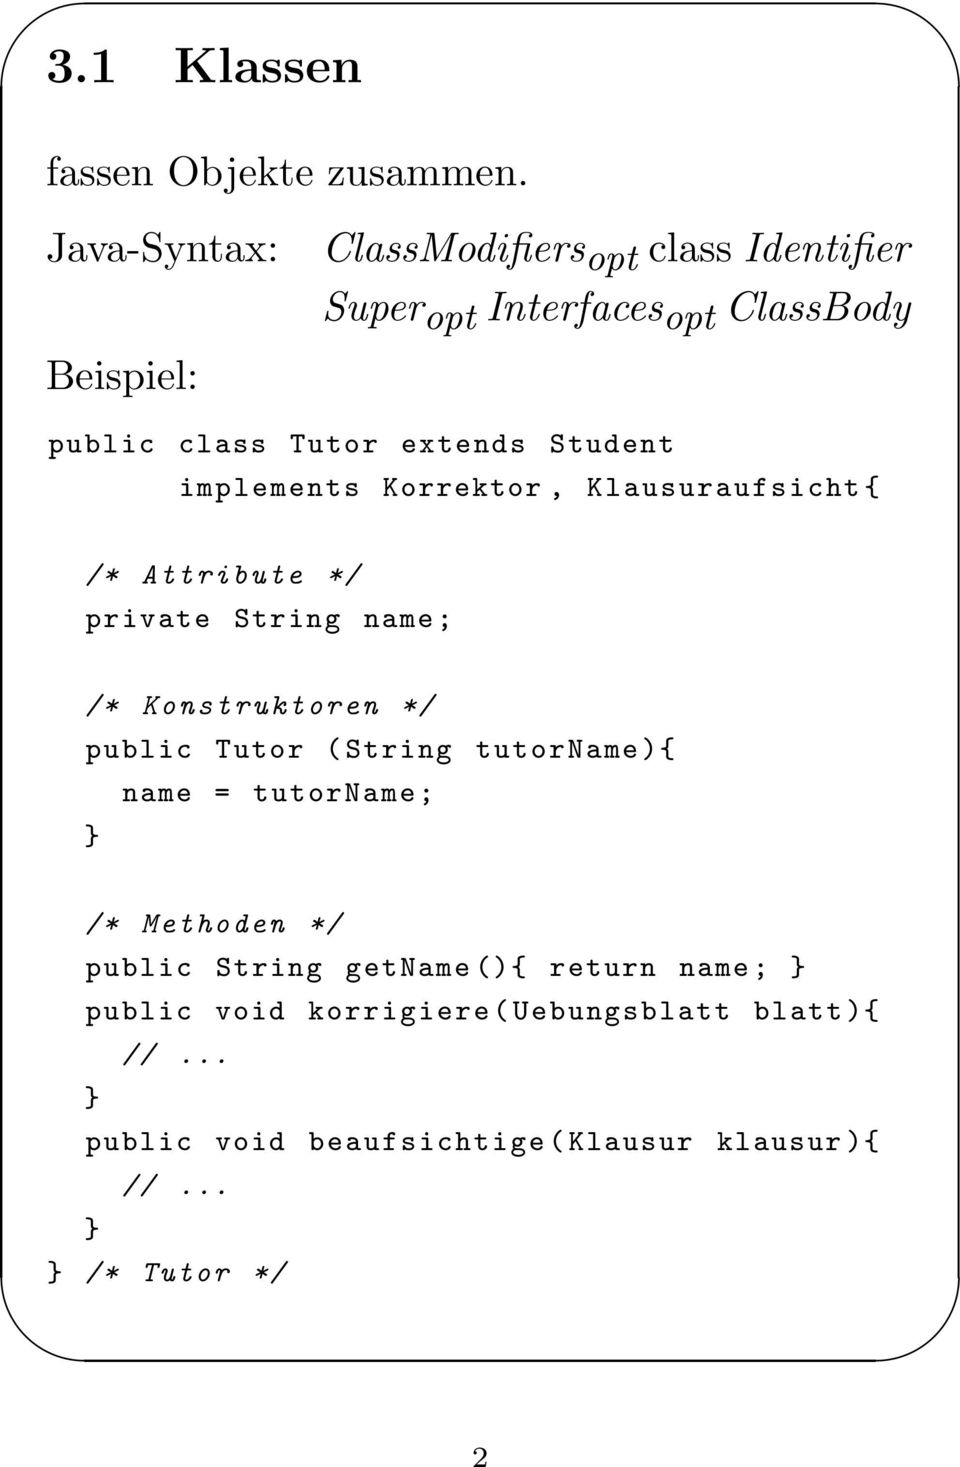 Student implements Korrektor, Klausuraufsicht { /* Attribute */ private String name ; /* Konstruktoren */ public Tutor (